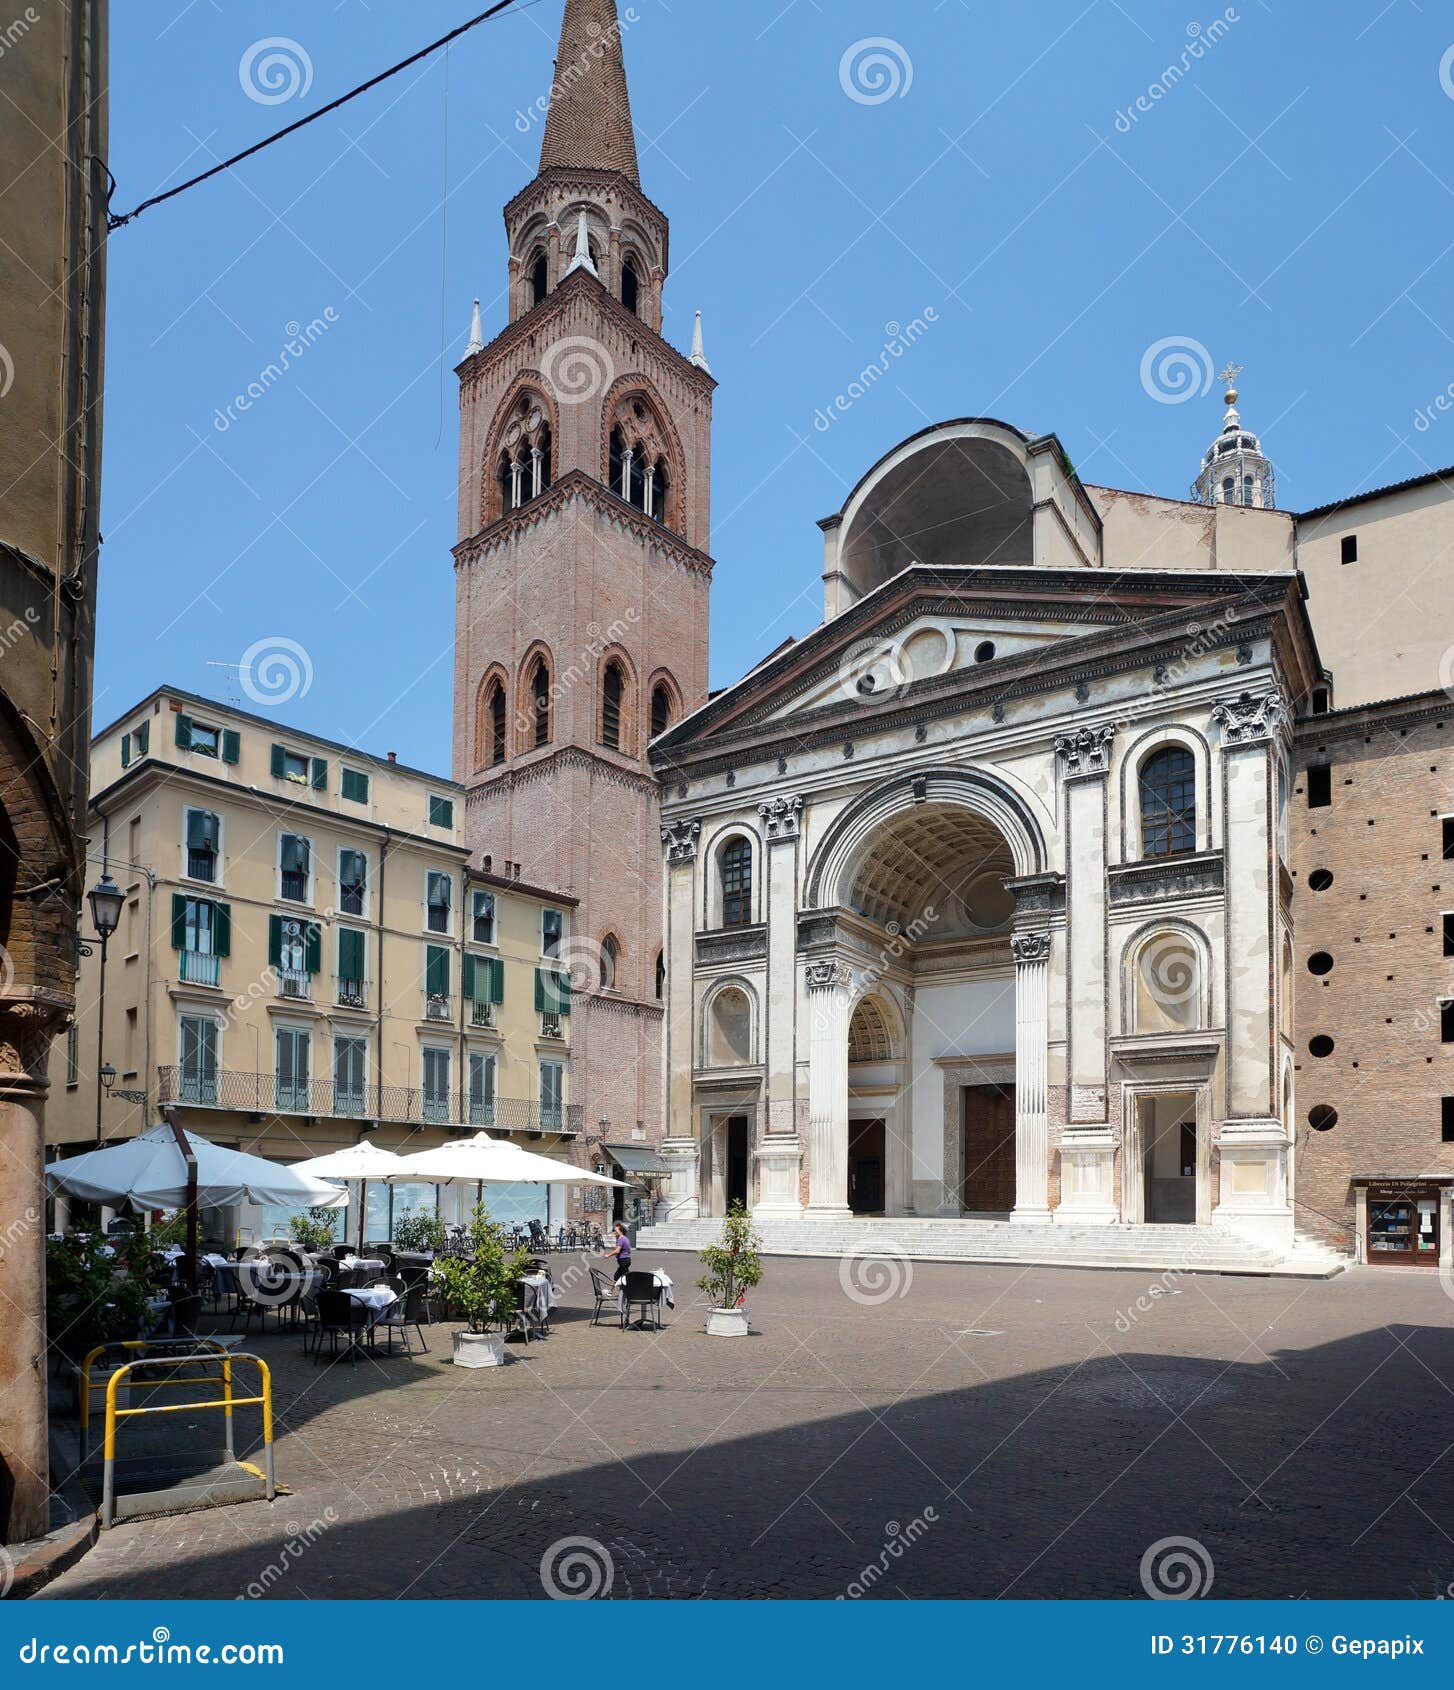 Mantua Renaissance Basilica Editorial Image - Image of italy, northern ...